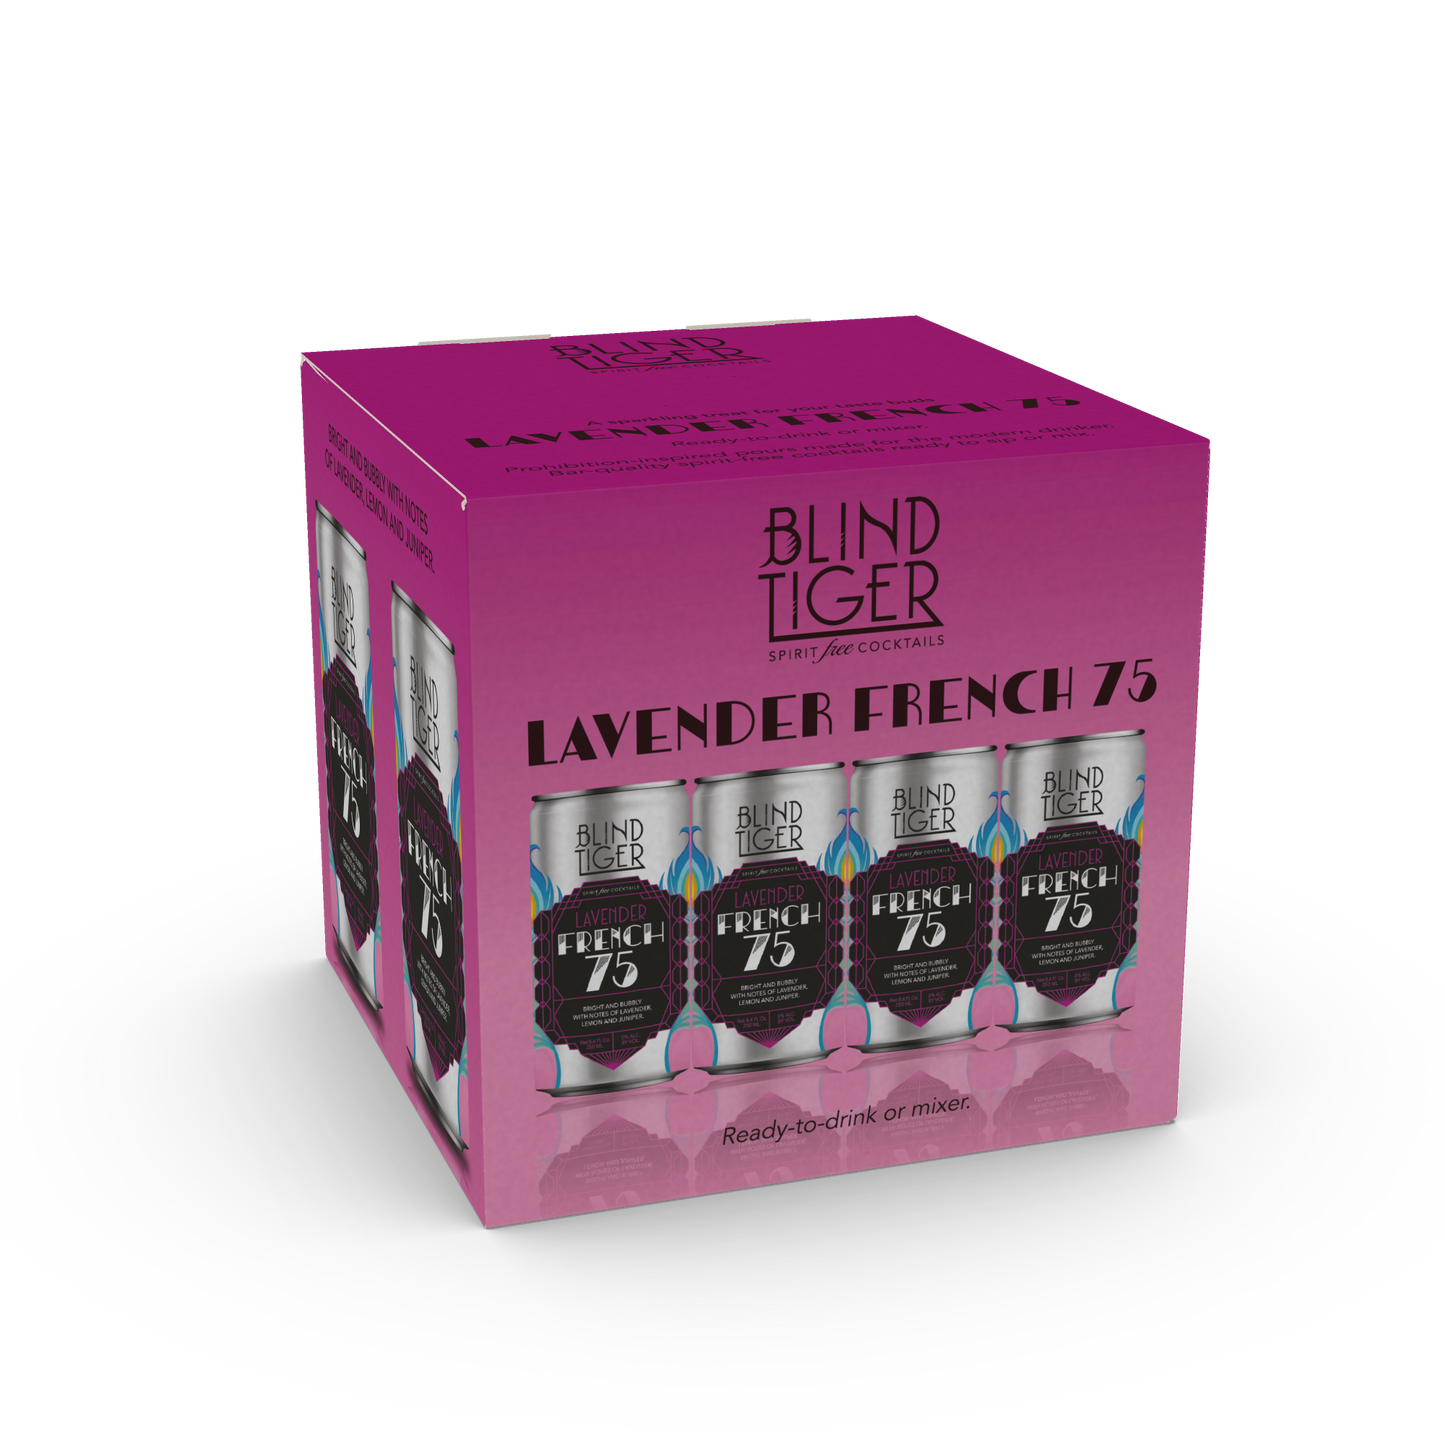 Blind Tiger - Lavender French 75 - Spirit-Free - 4-pack - 8.4oz